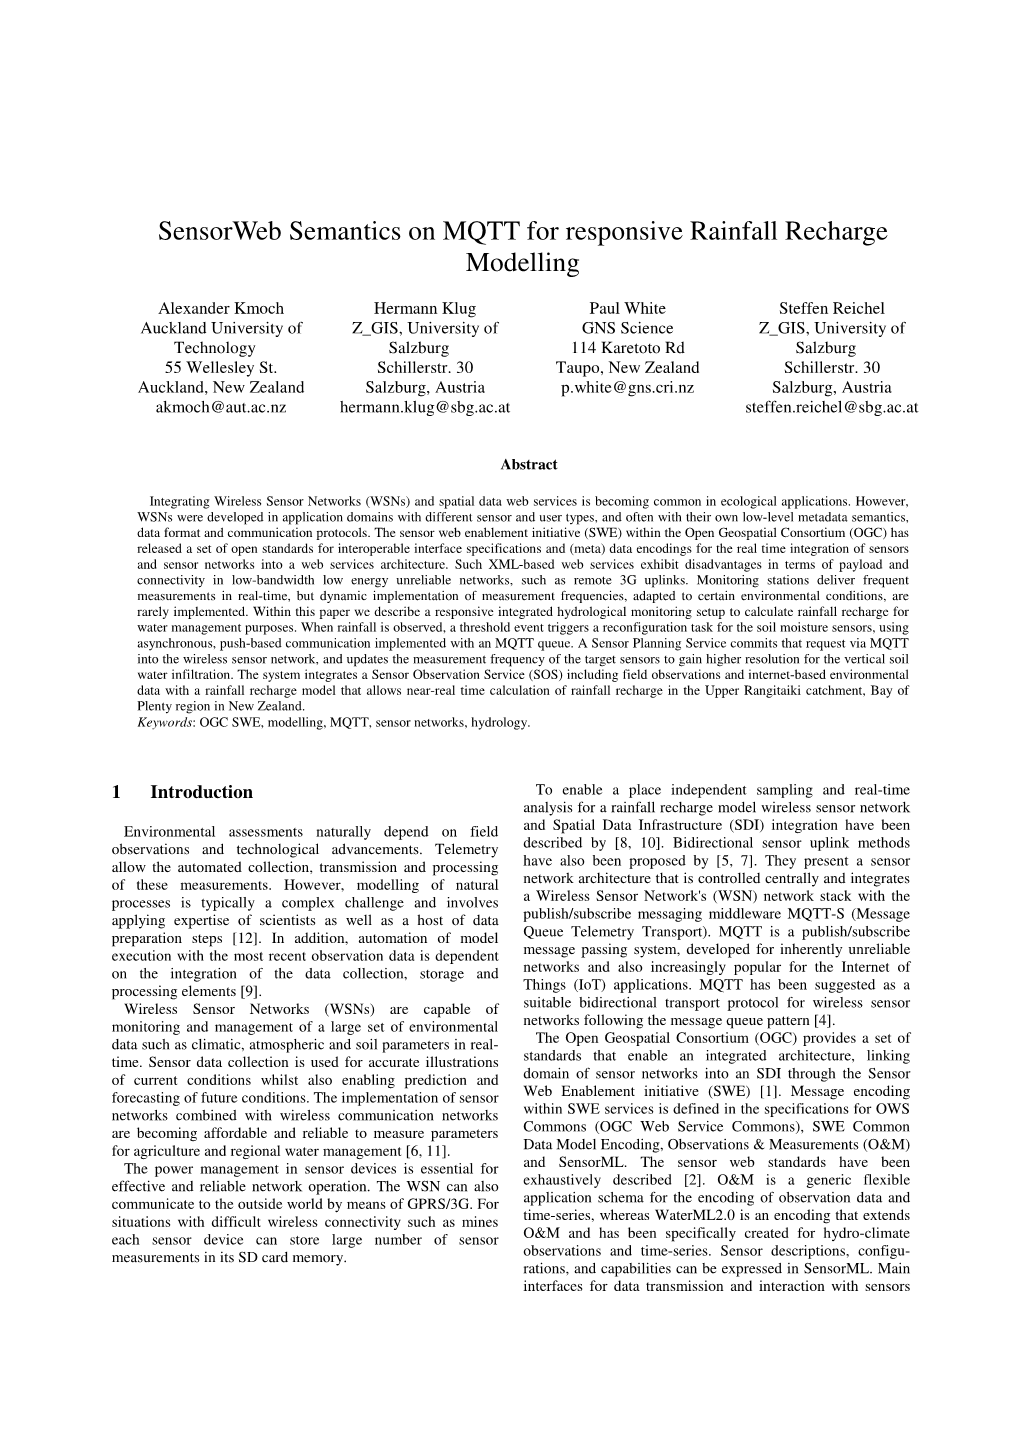 Sensorweb Semantics on MQTT for Responsive Rainfall Recharge Modelling